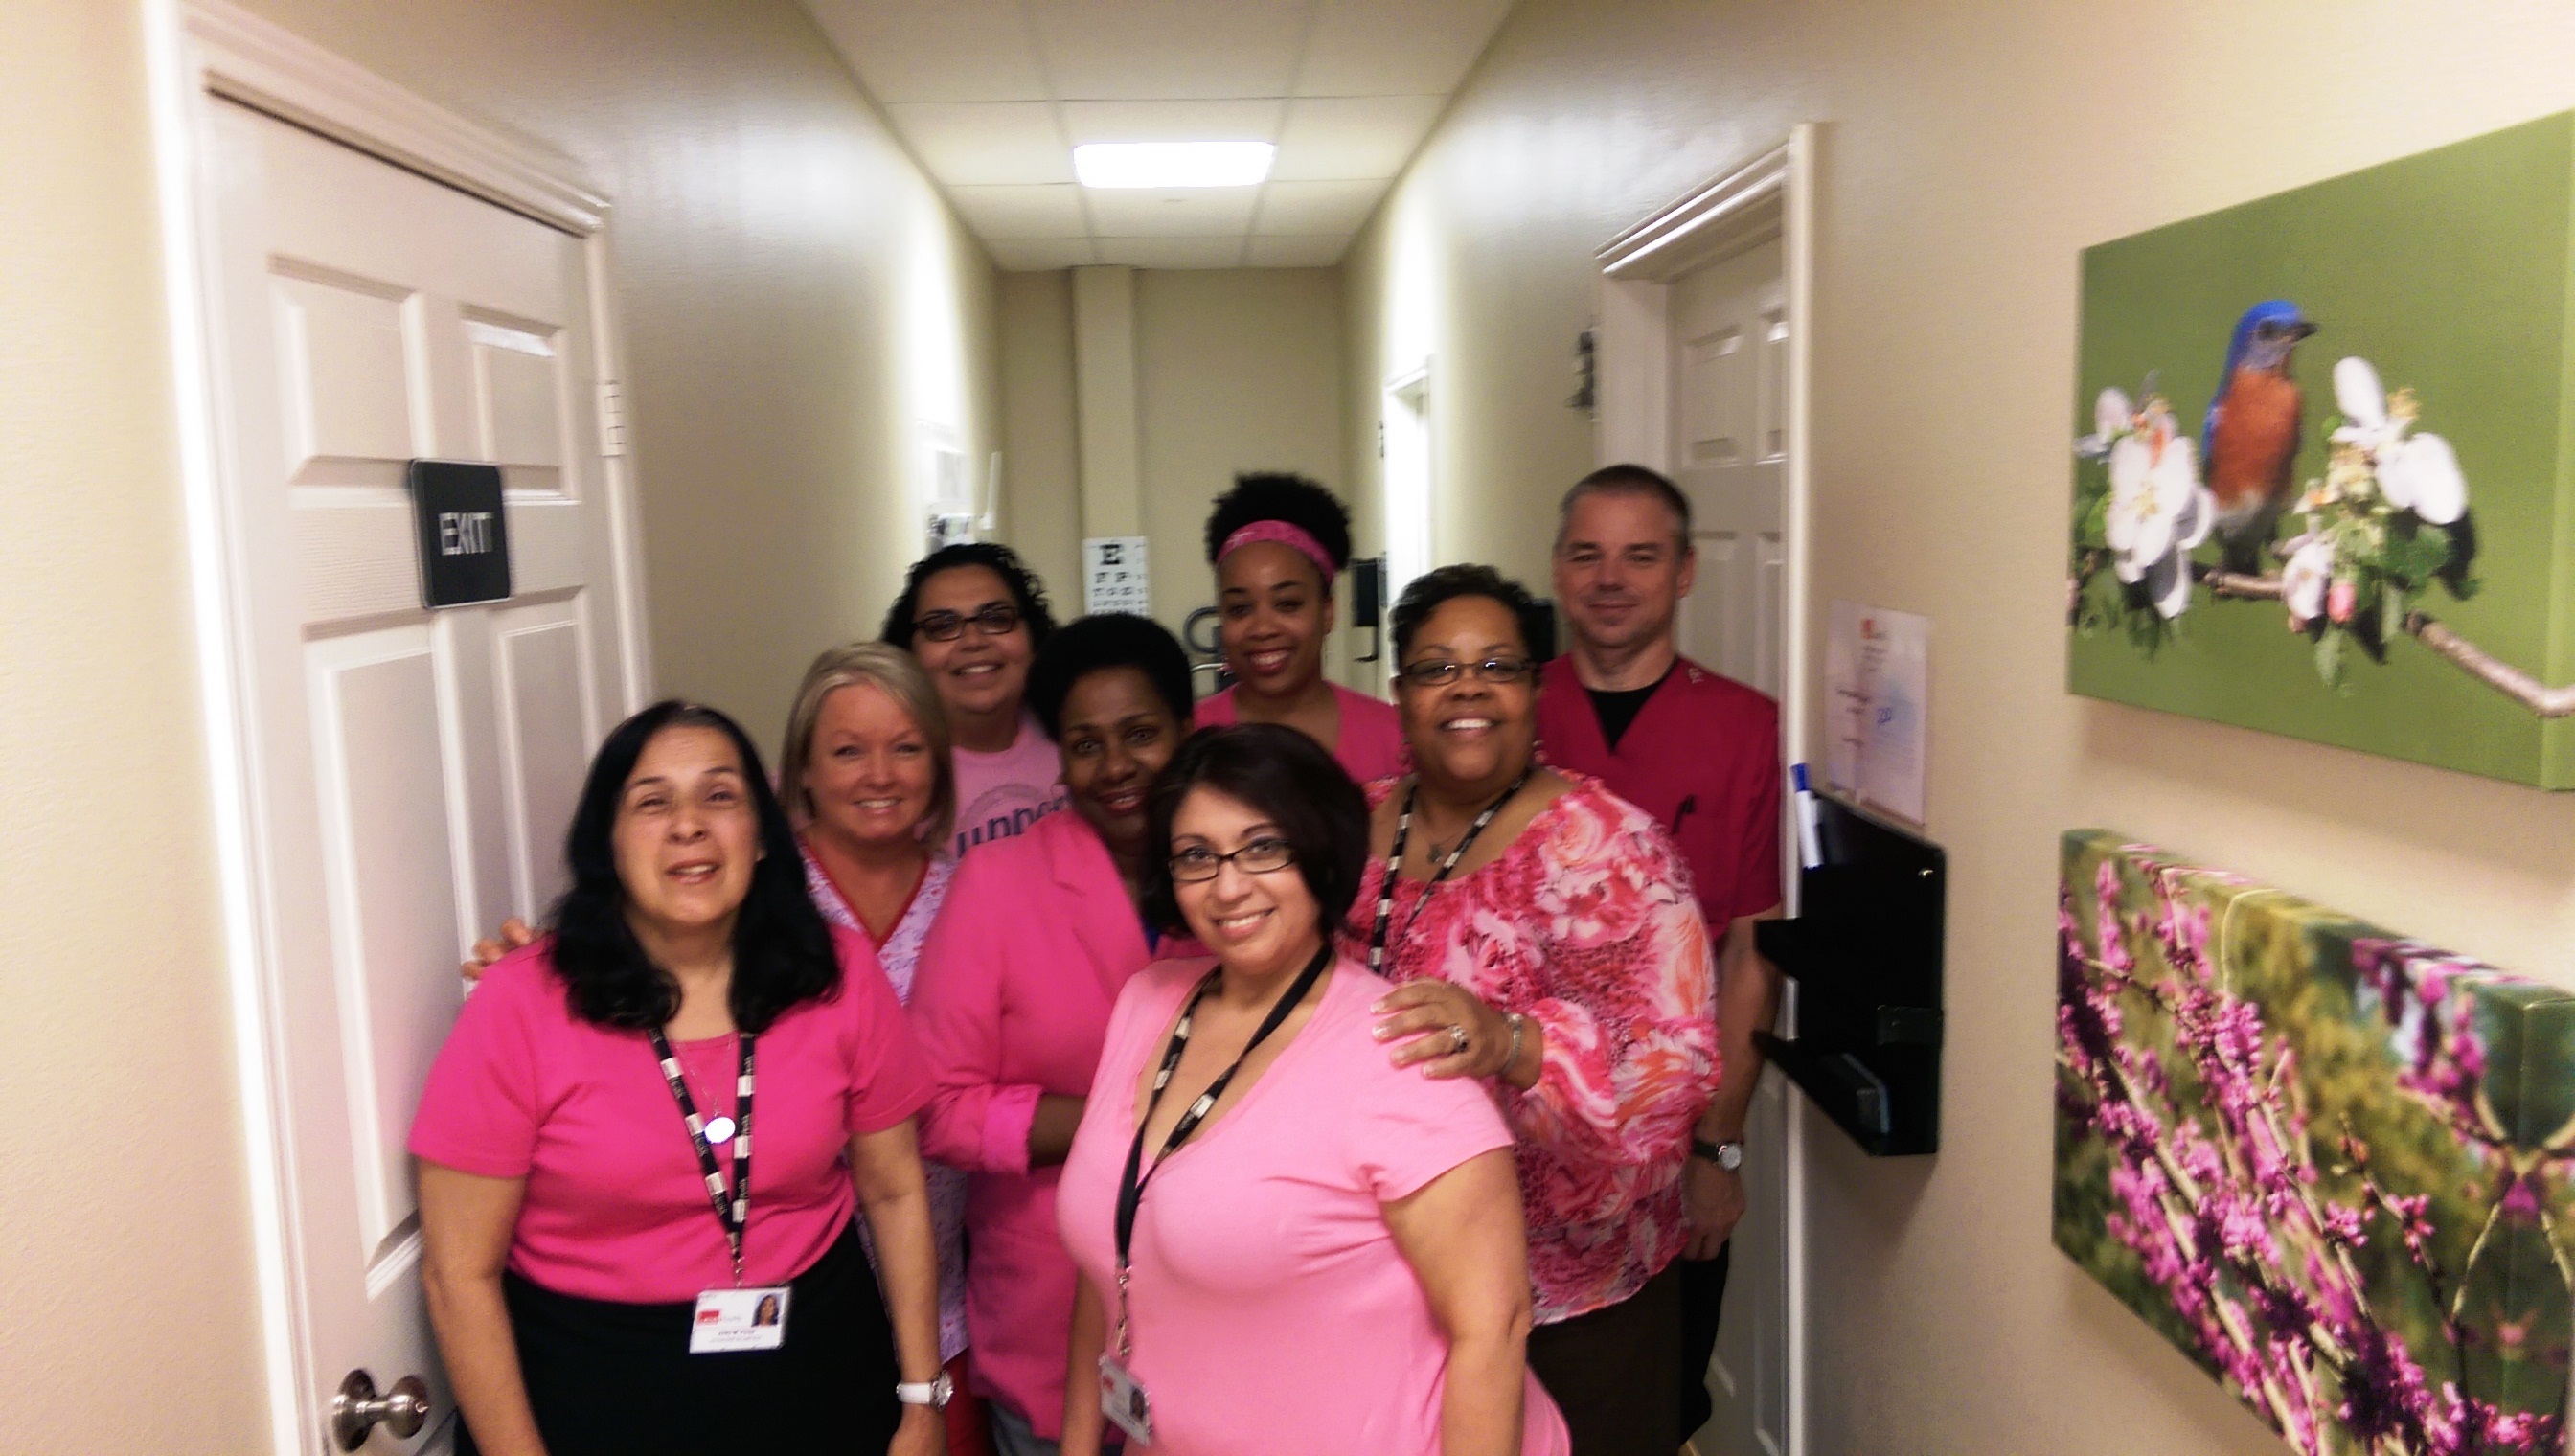 FMC - Dickinson's team pink!